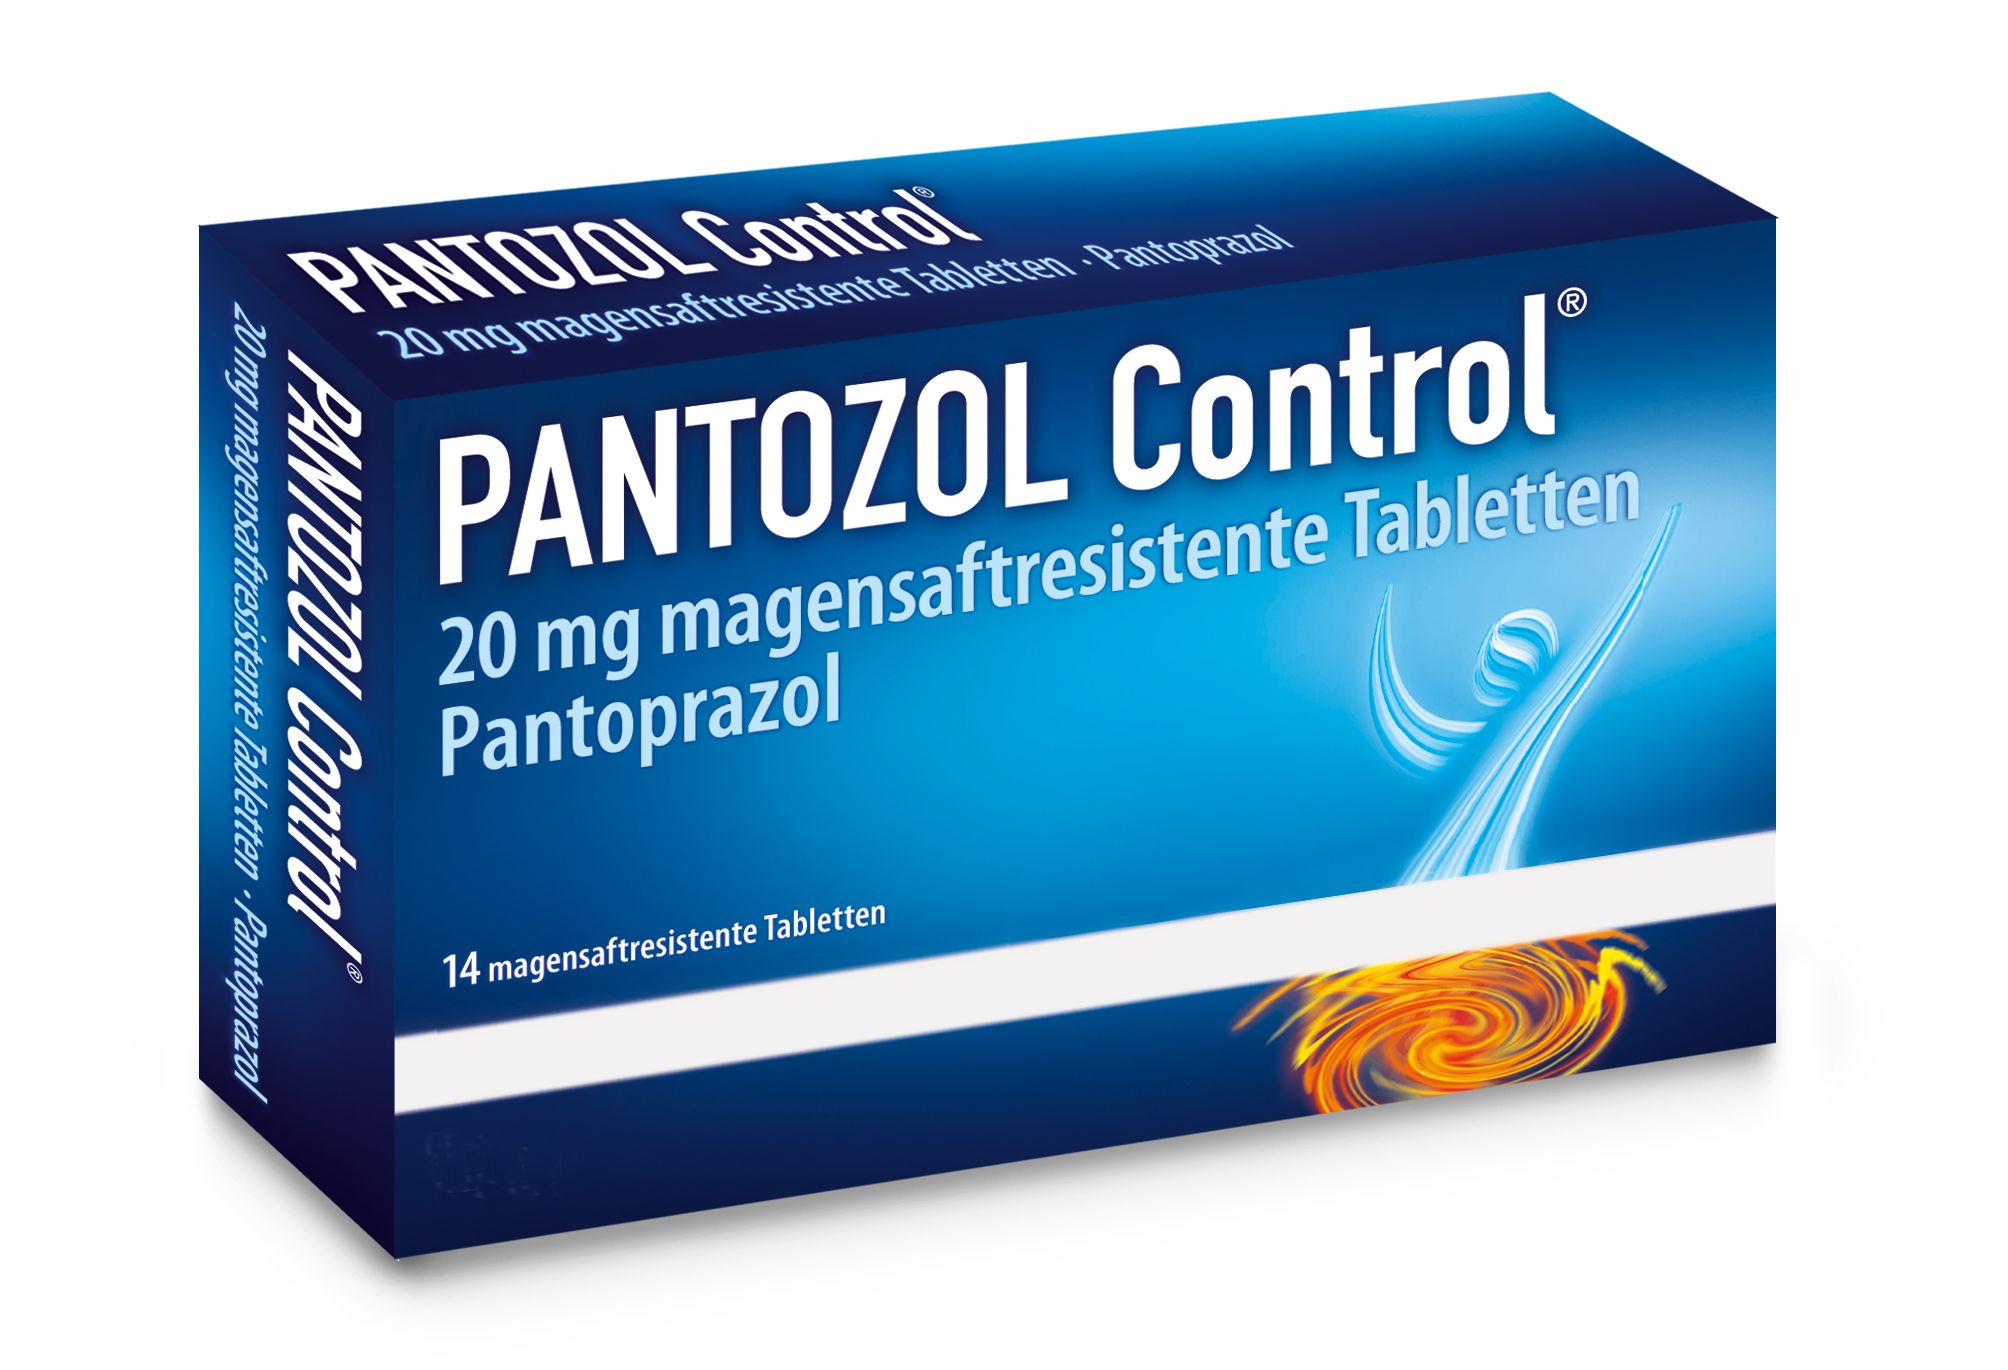 PANTOZOL CONTROL MSR TBL